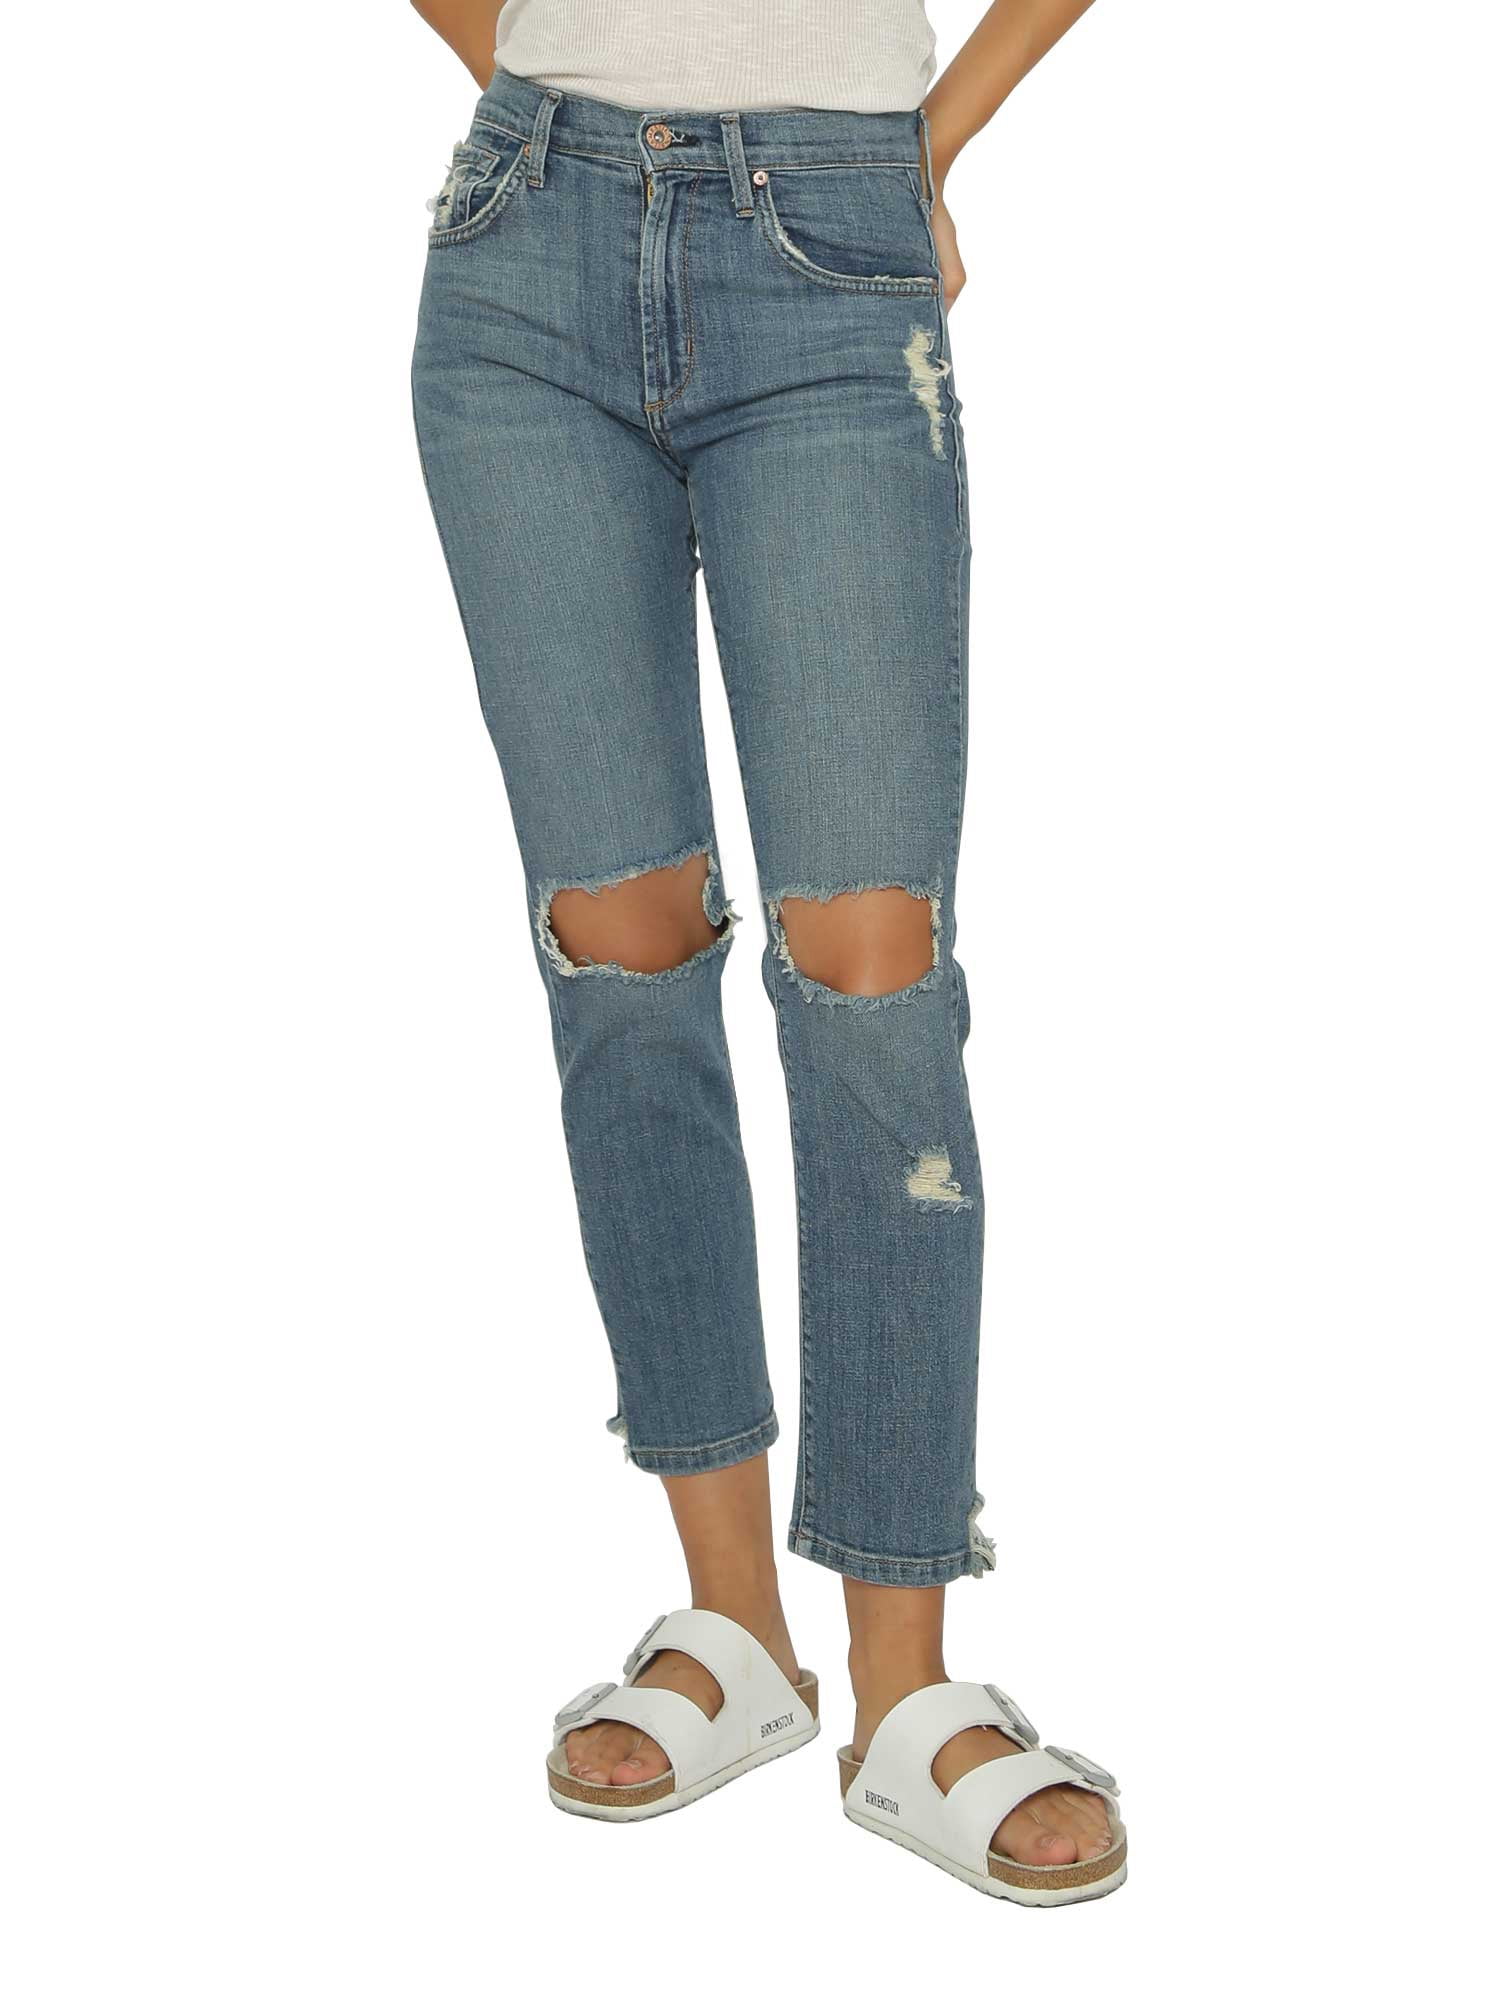 walmart women's high rise jeans